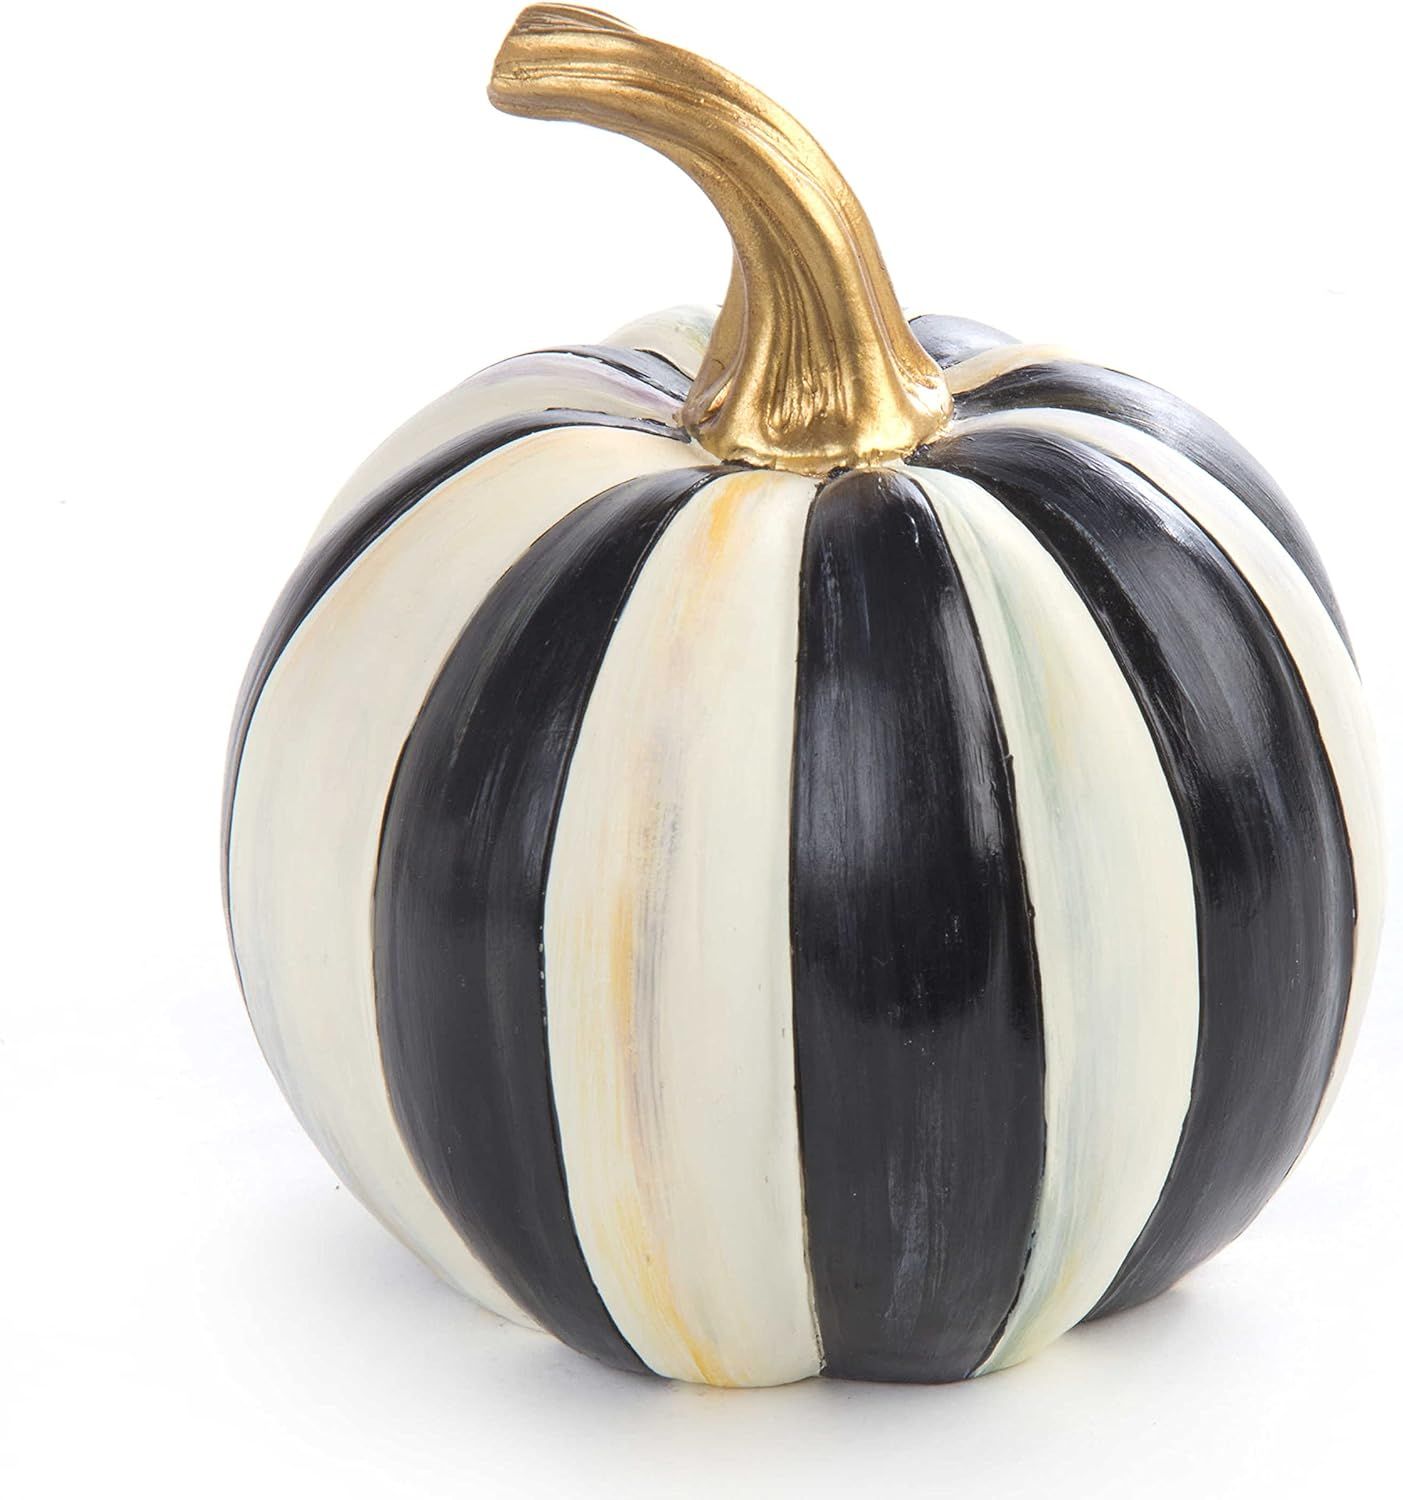 MacKenzie-Childs Courtly Stripe Black-and-White Mini Decorative Pumpkin for Fall Decor, Autumn De... | Amazon (US)